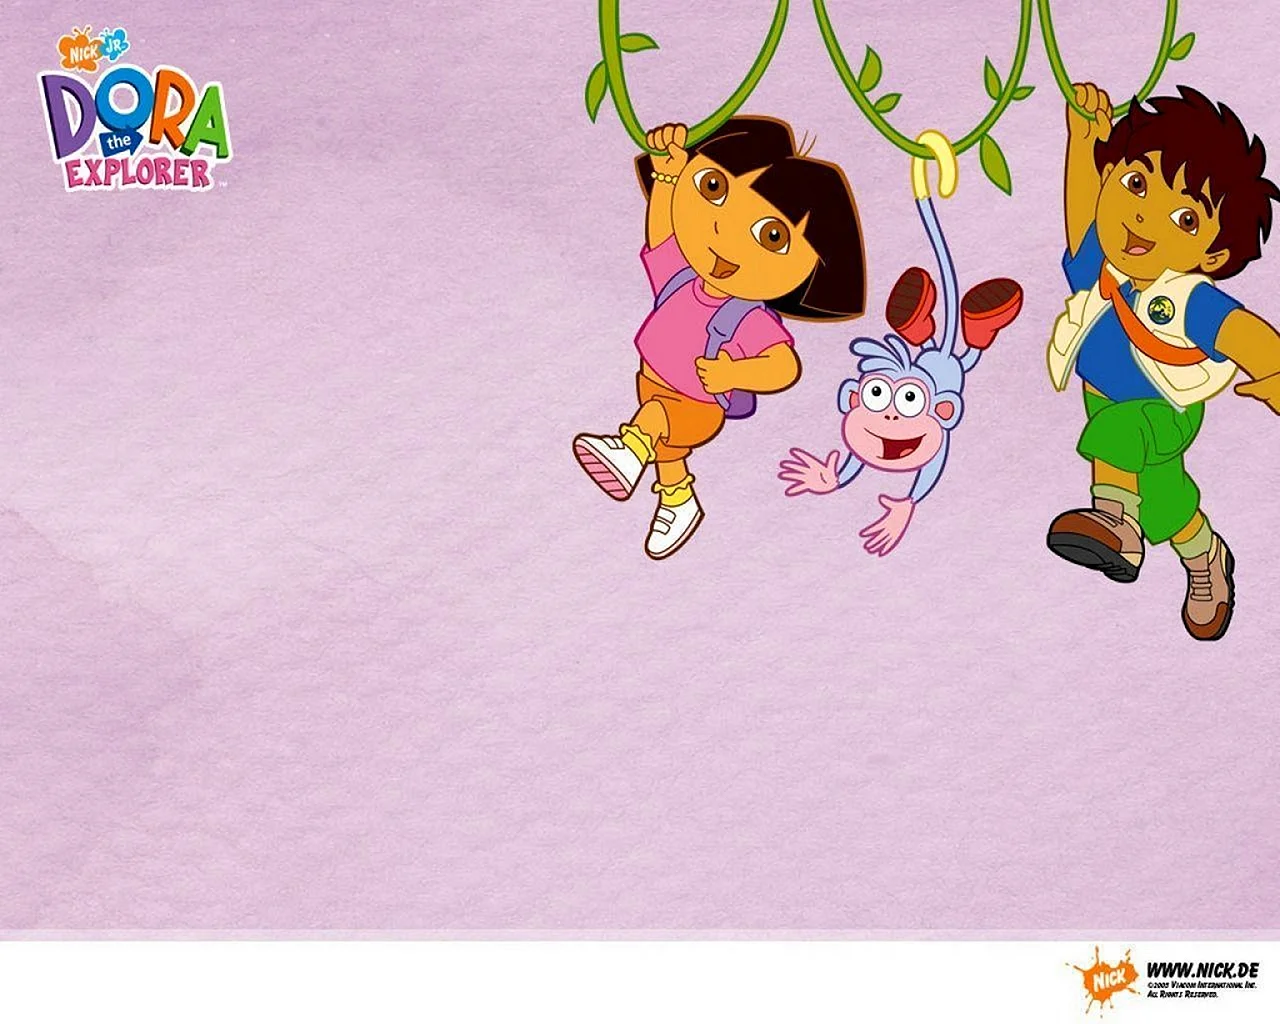 Dora Explorer Background Wallpaper